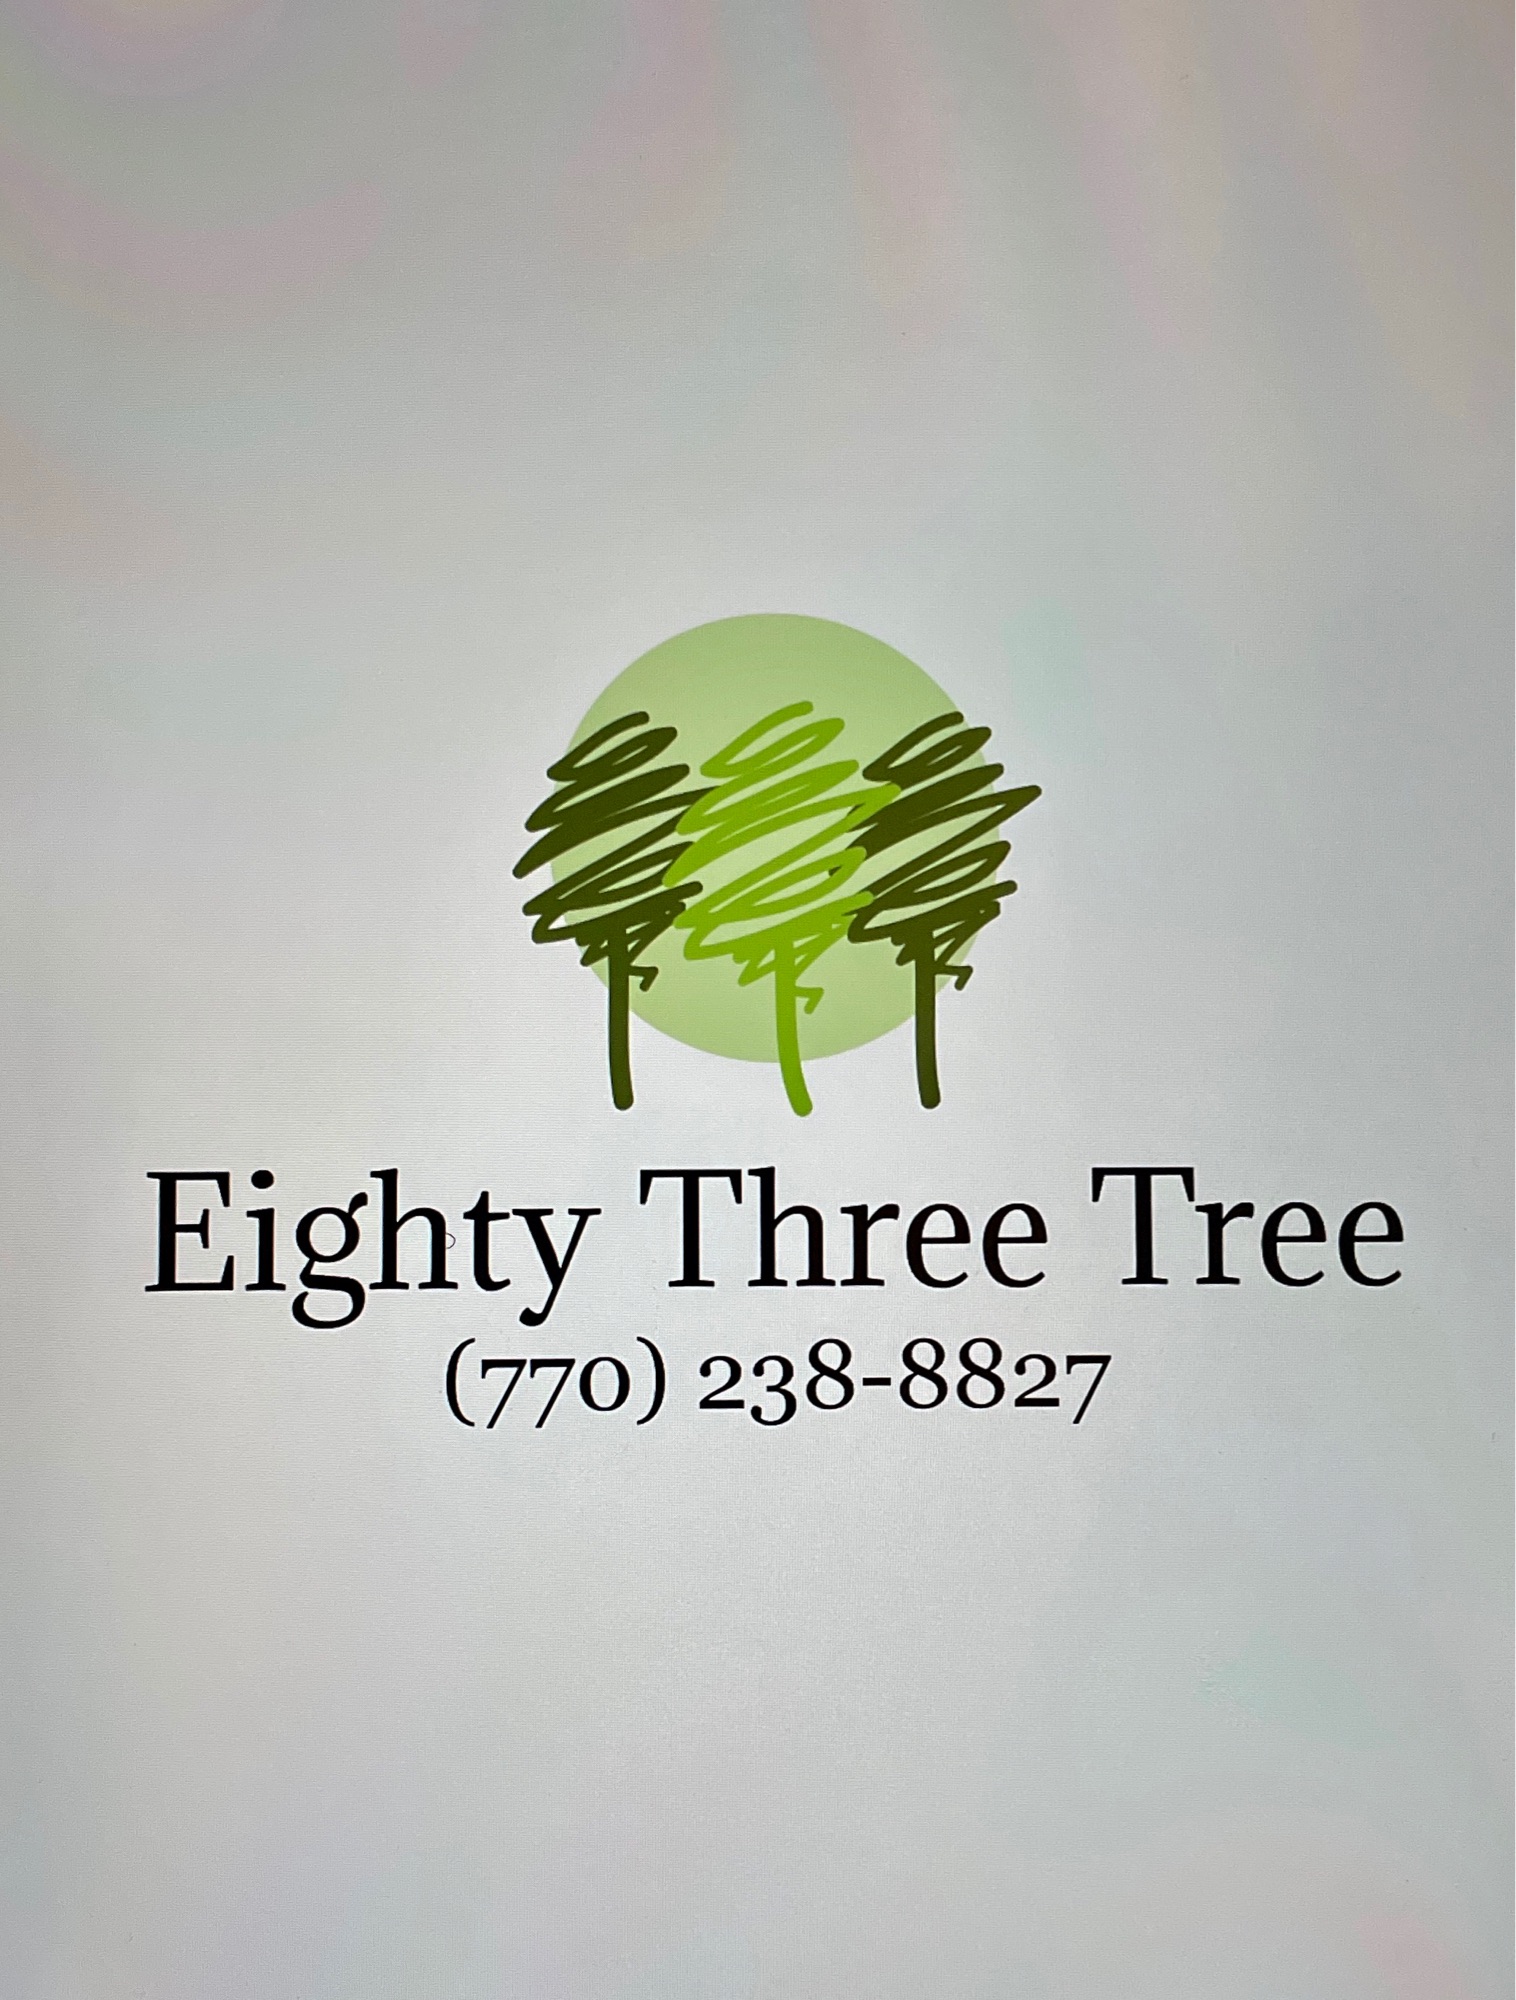 Eighty Three Tree LLC Logo